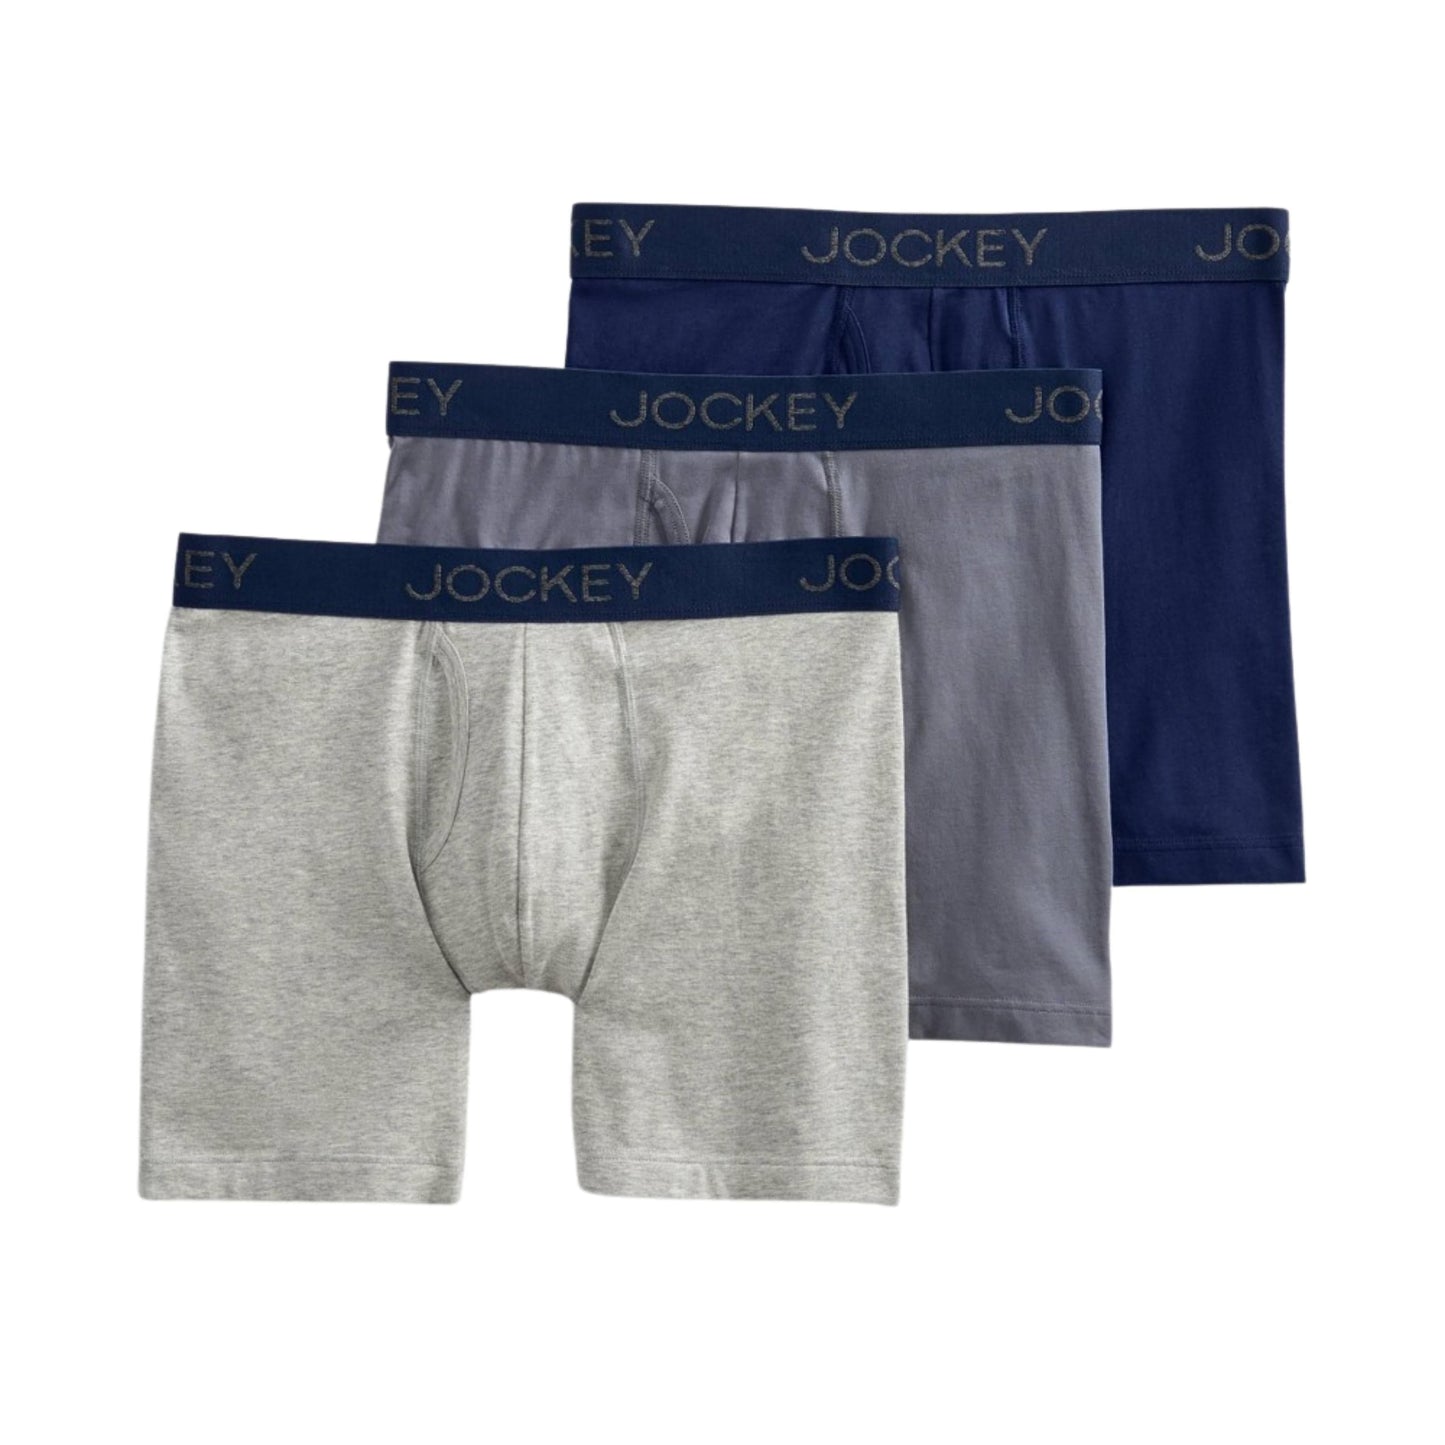 JOCKEY Mens Underwear M / Multi-Color JOCKEY - Casual Boxers Set